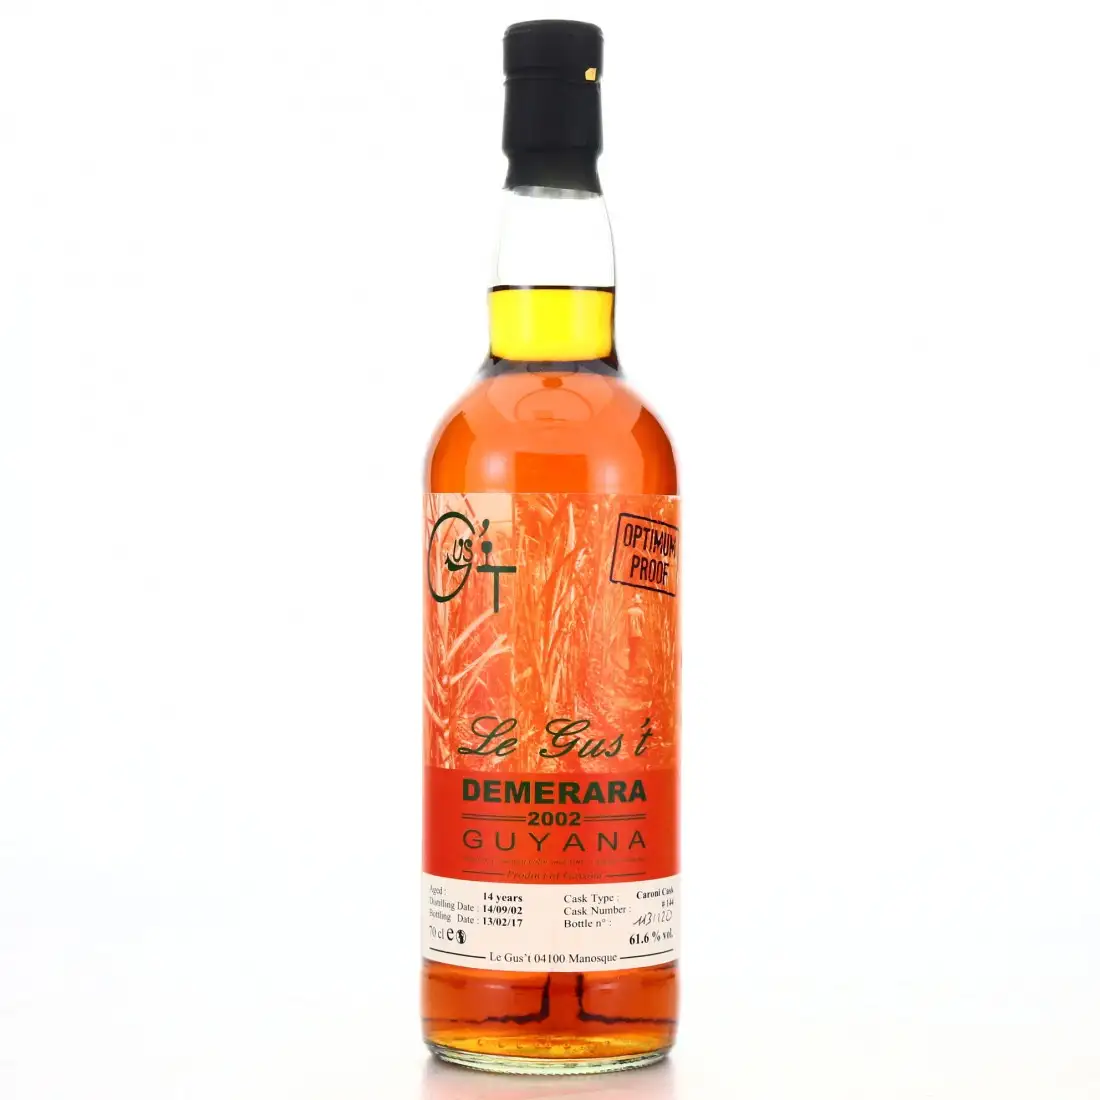 Image of the front of the bottle of the rum Demerara Rum Optimum Proof